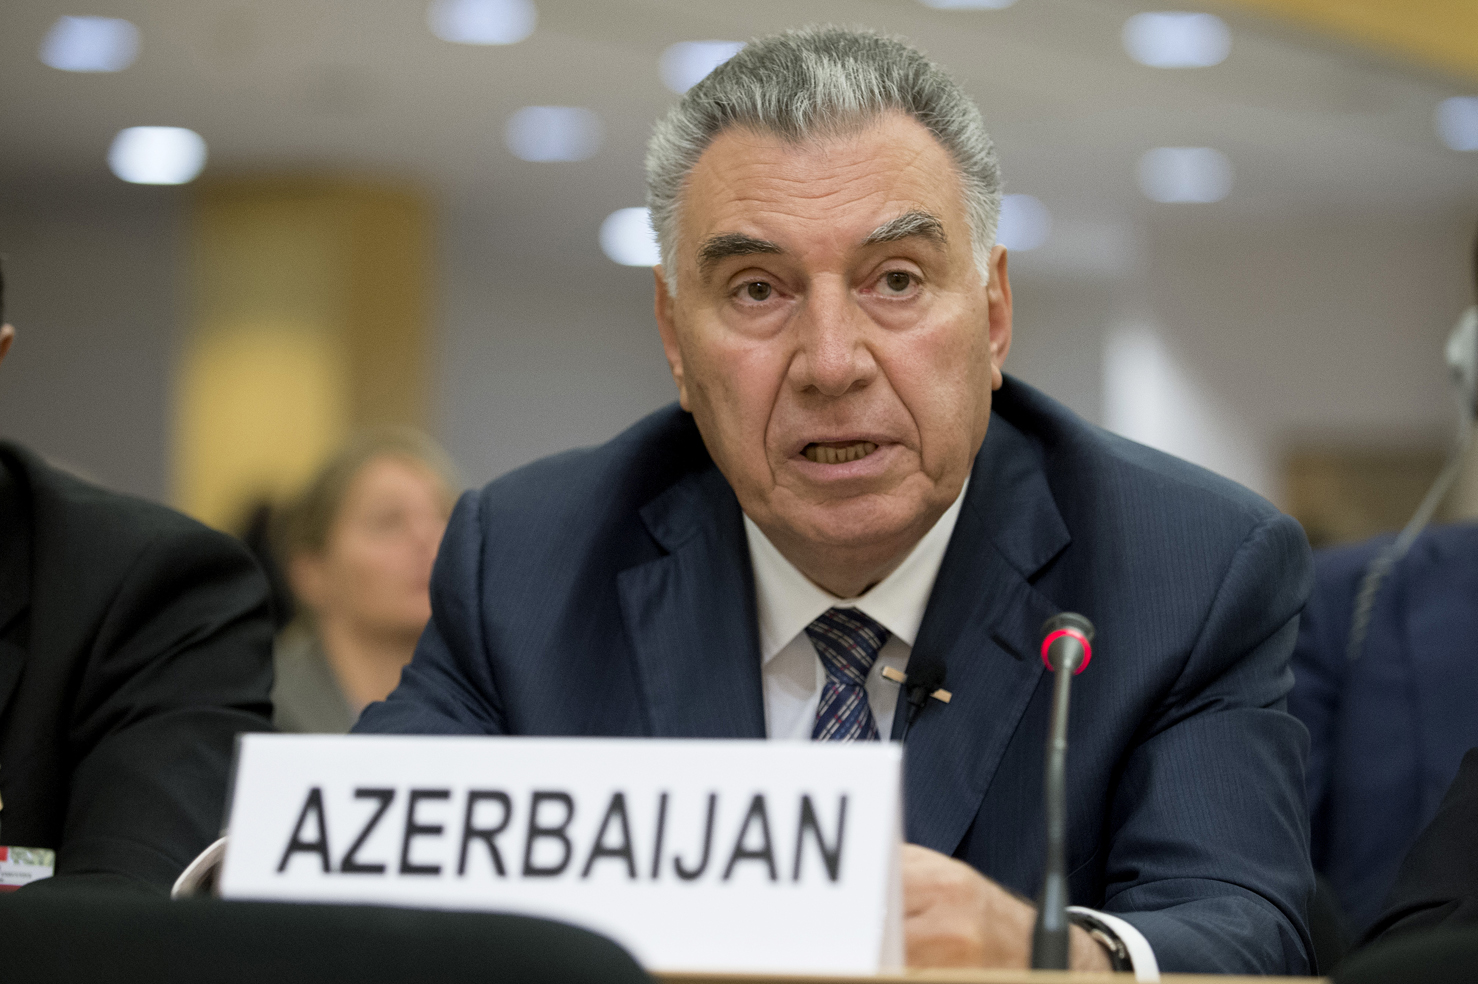 Projects of int'l humanitarian organizations important for Azerbaijan